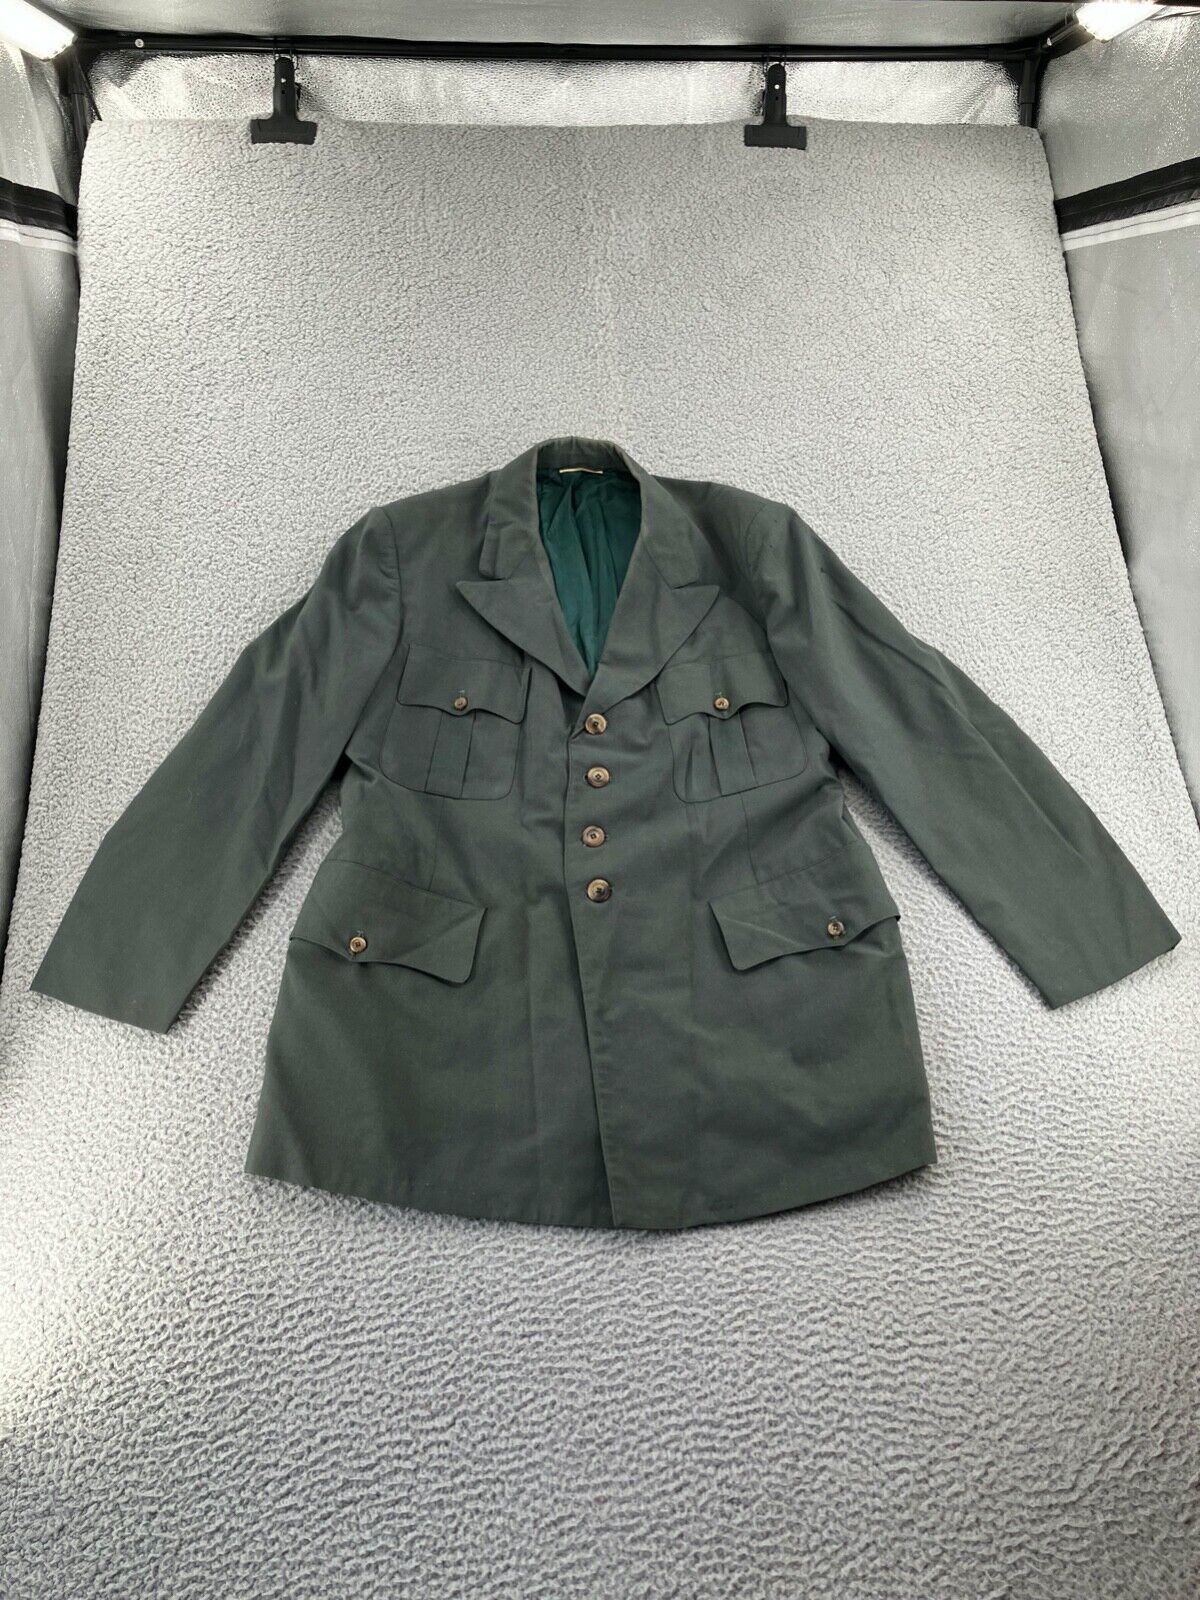 Vintage US Army Military Blazer Mens 48 Regular Green Wool Coat Uniform Jacket